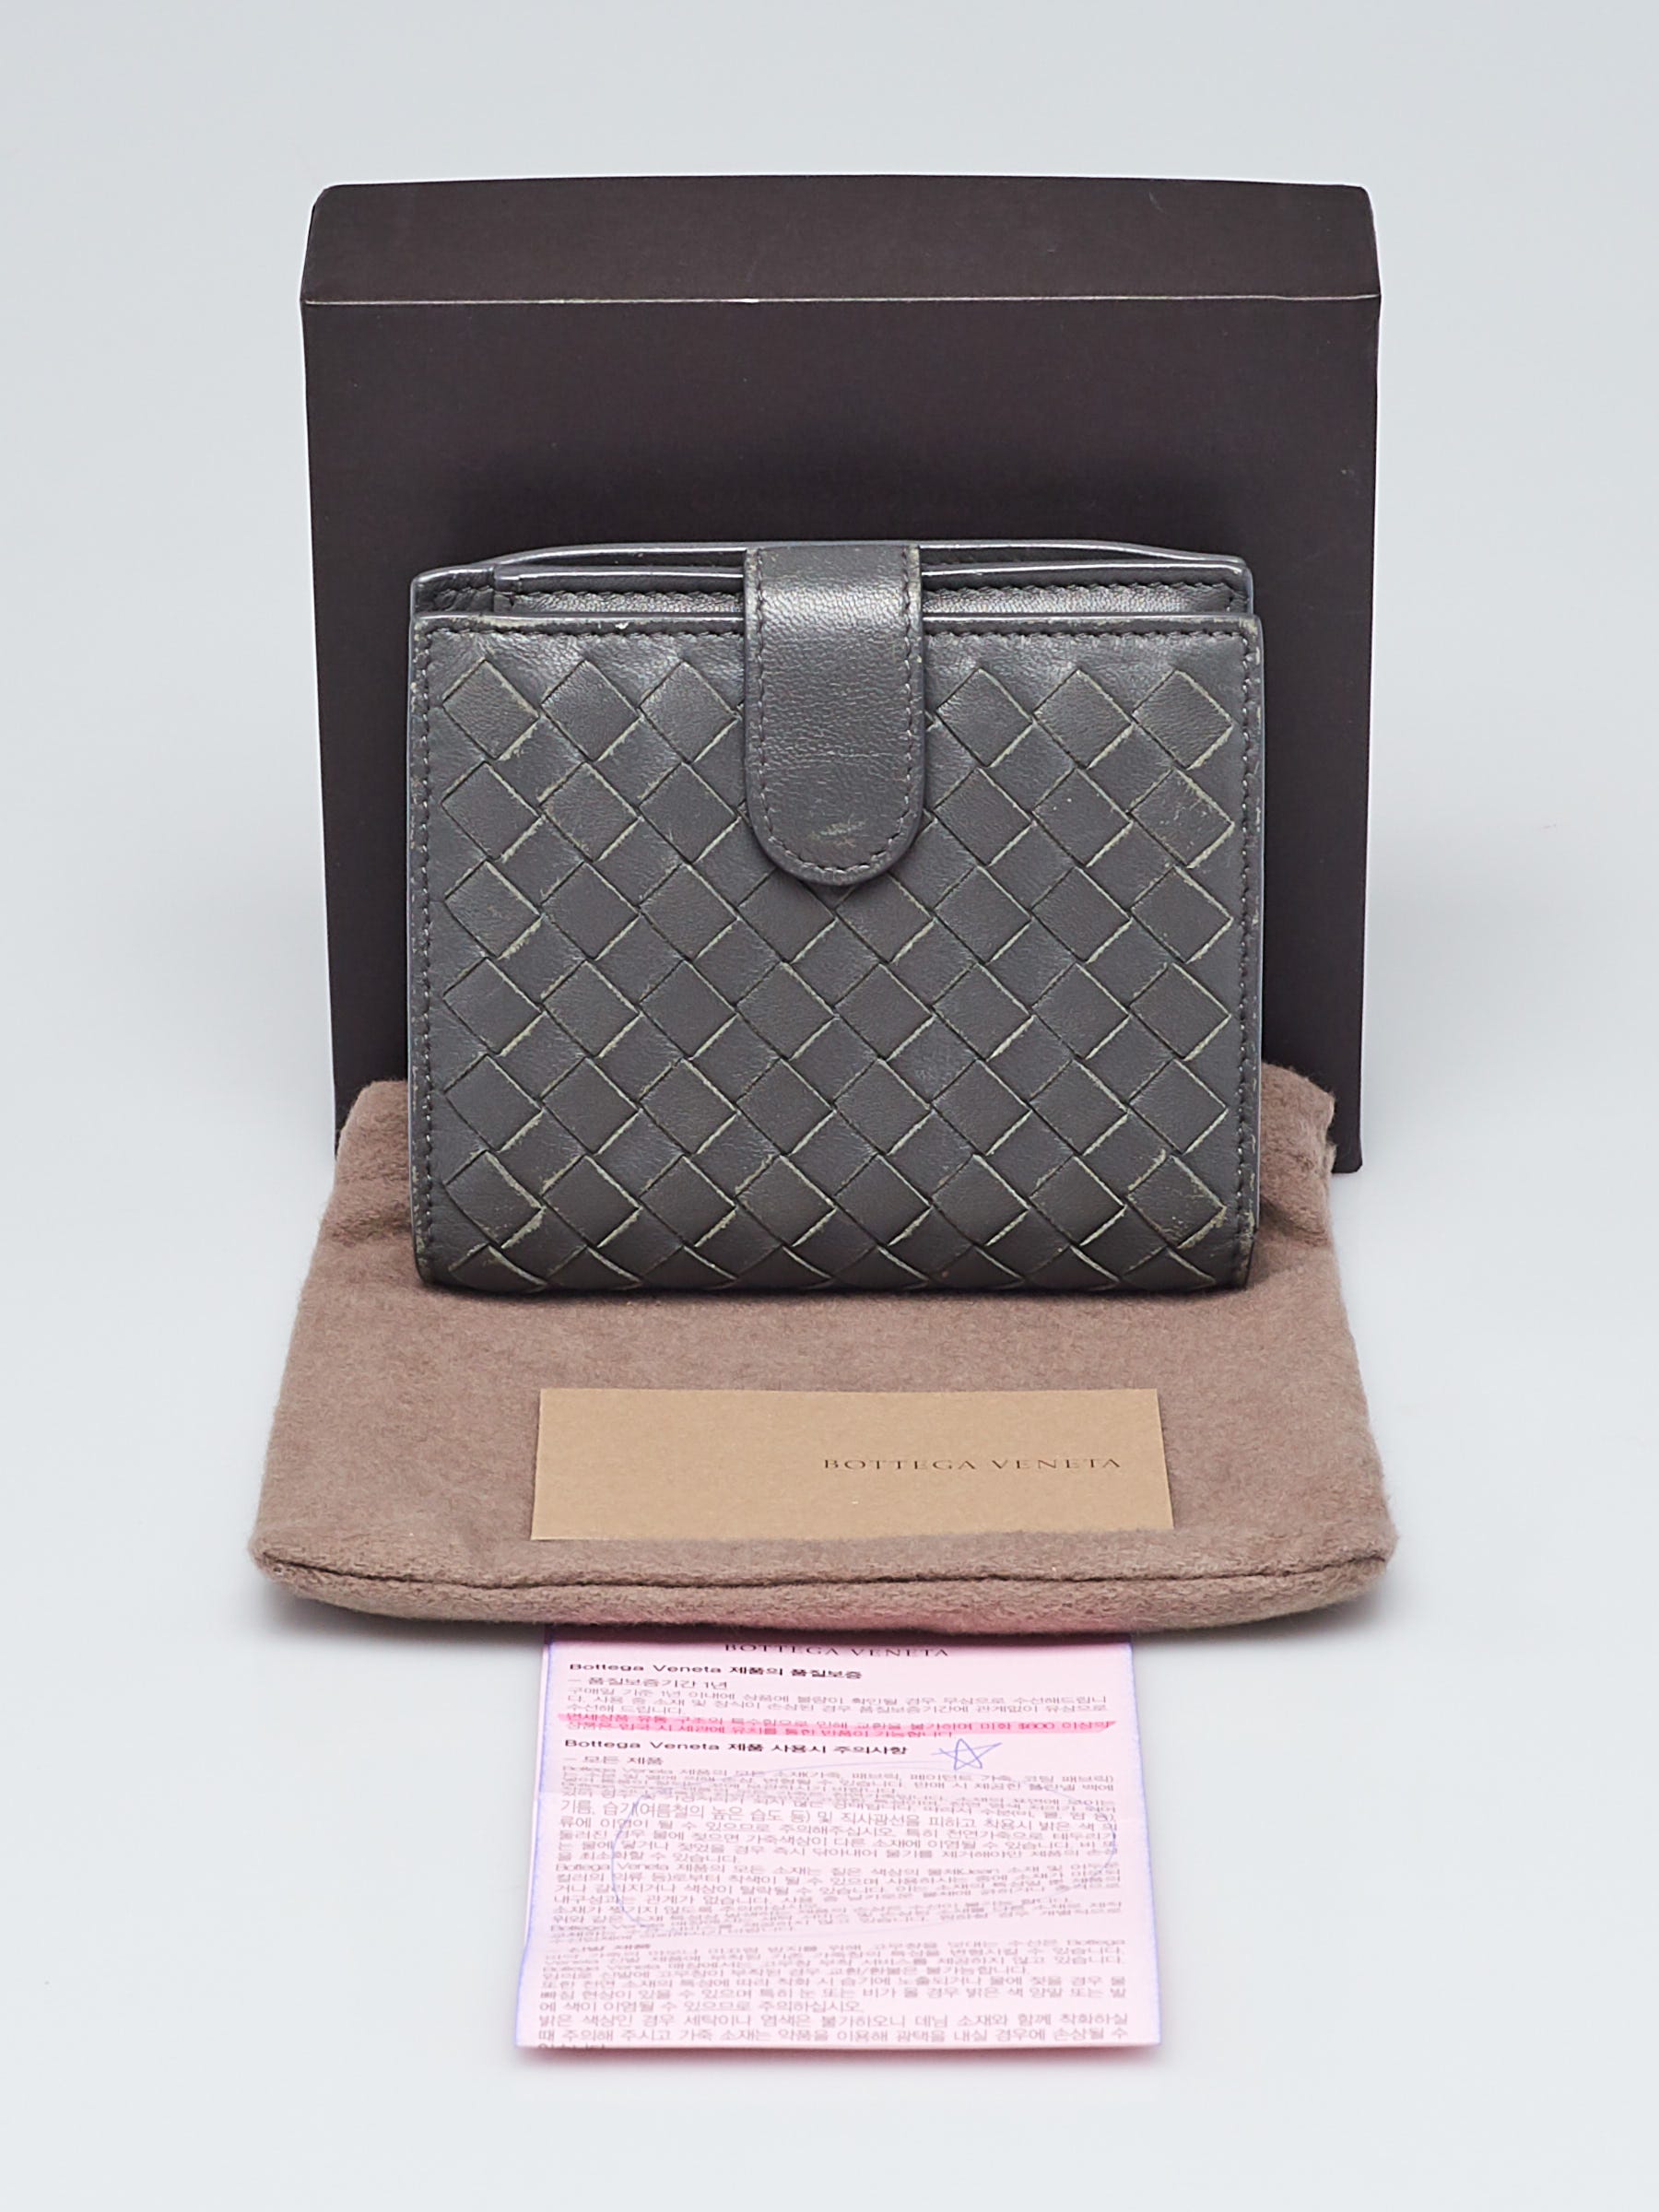 Bottega Veneta® Women's Small Cassette Compact Zip Around Wallet in Taupe  Grey. Shop online now.